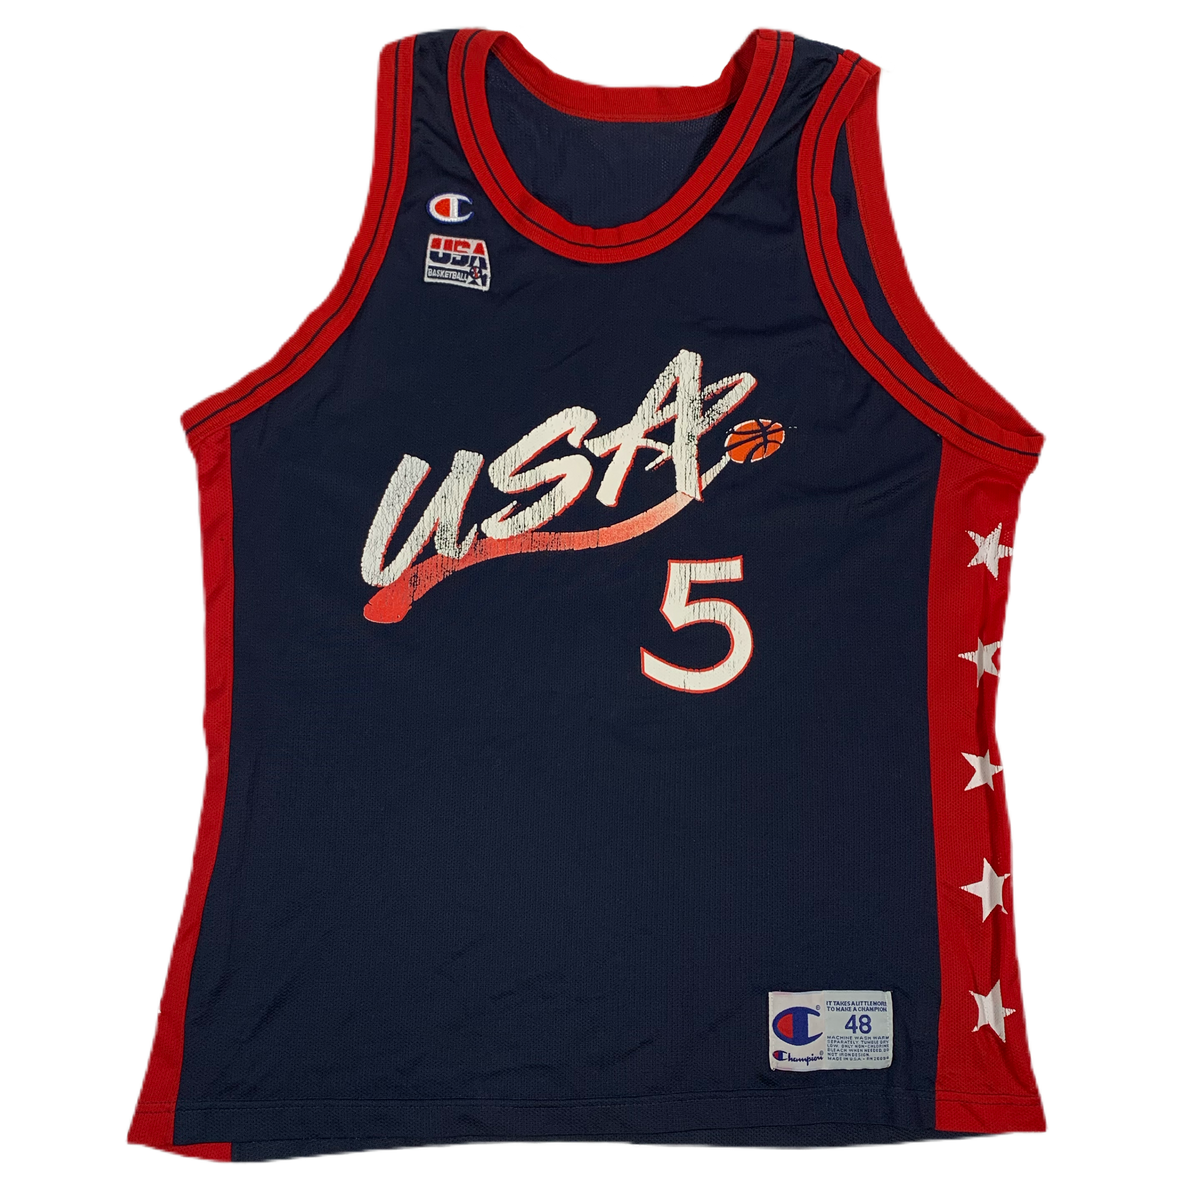 Vintage Grant Hill “USA Olympics” Champion Basketball Jersey - jointcustodydc